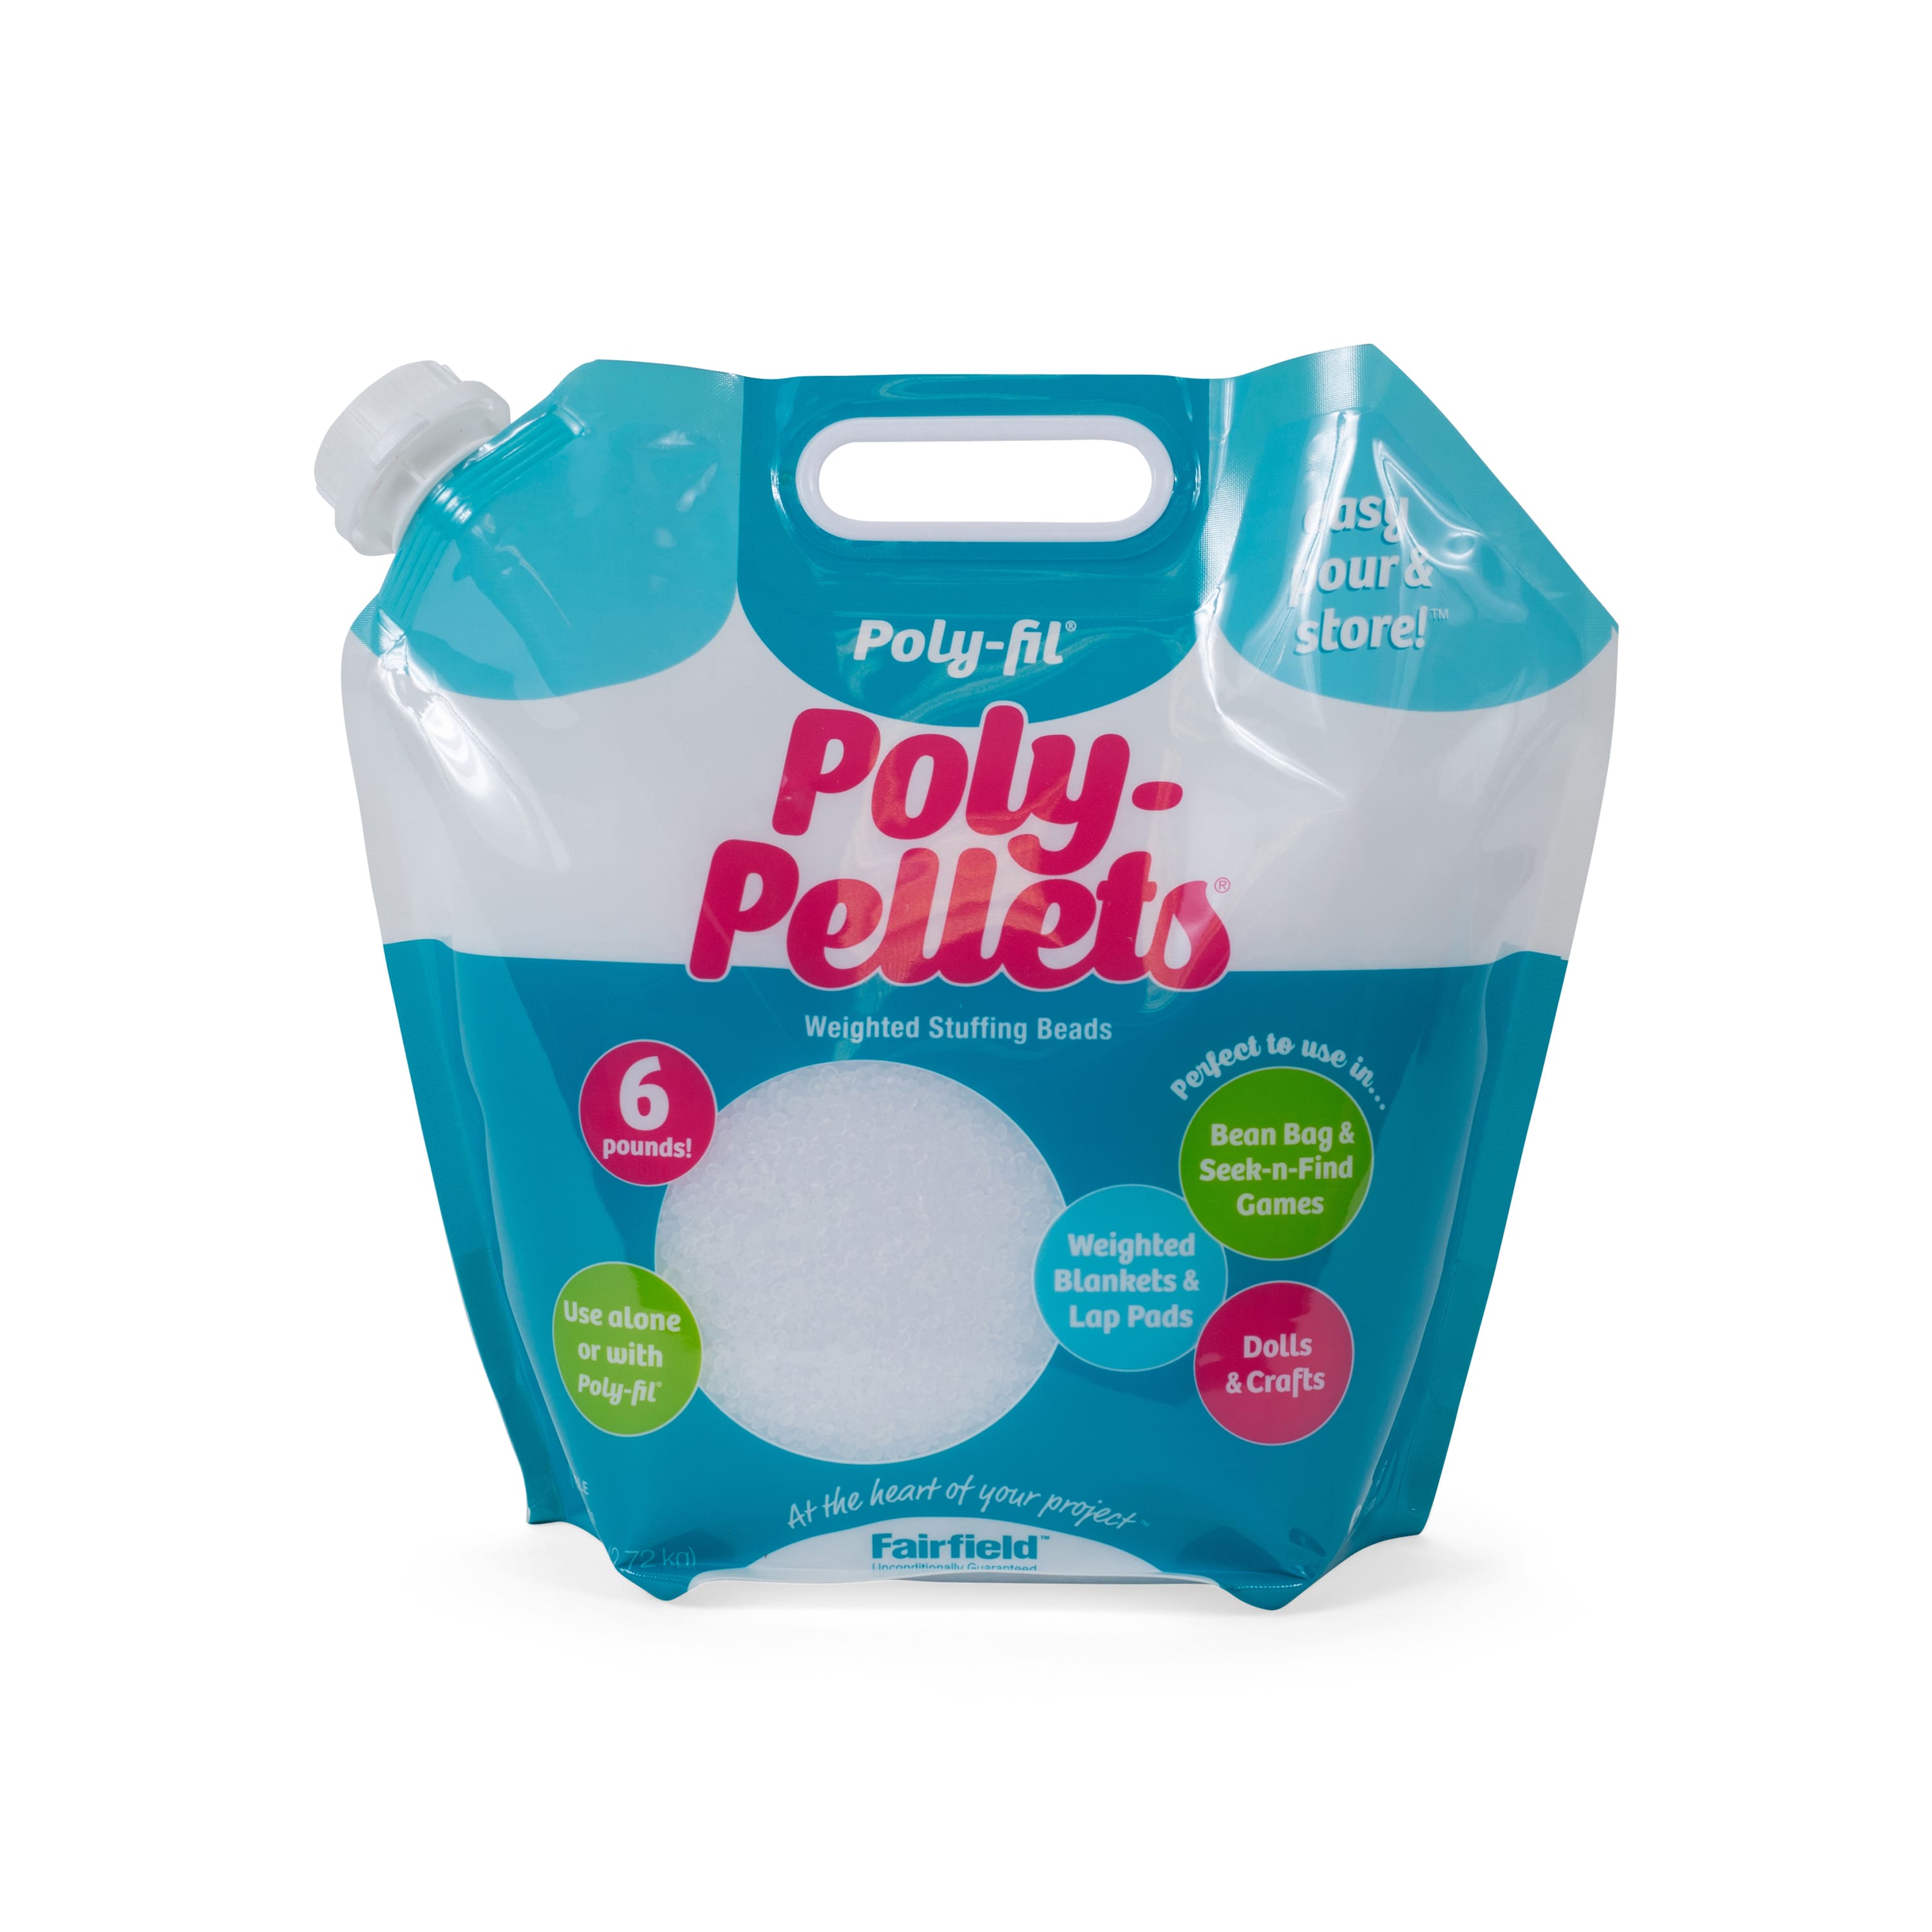 PP Poly Pellets - Poli Plastic Pellets